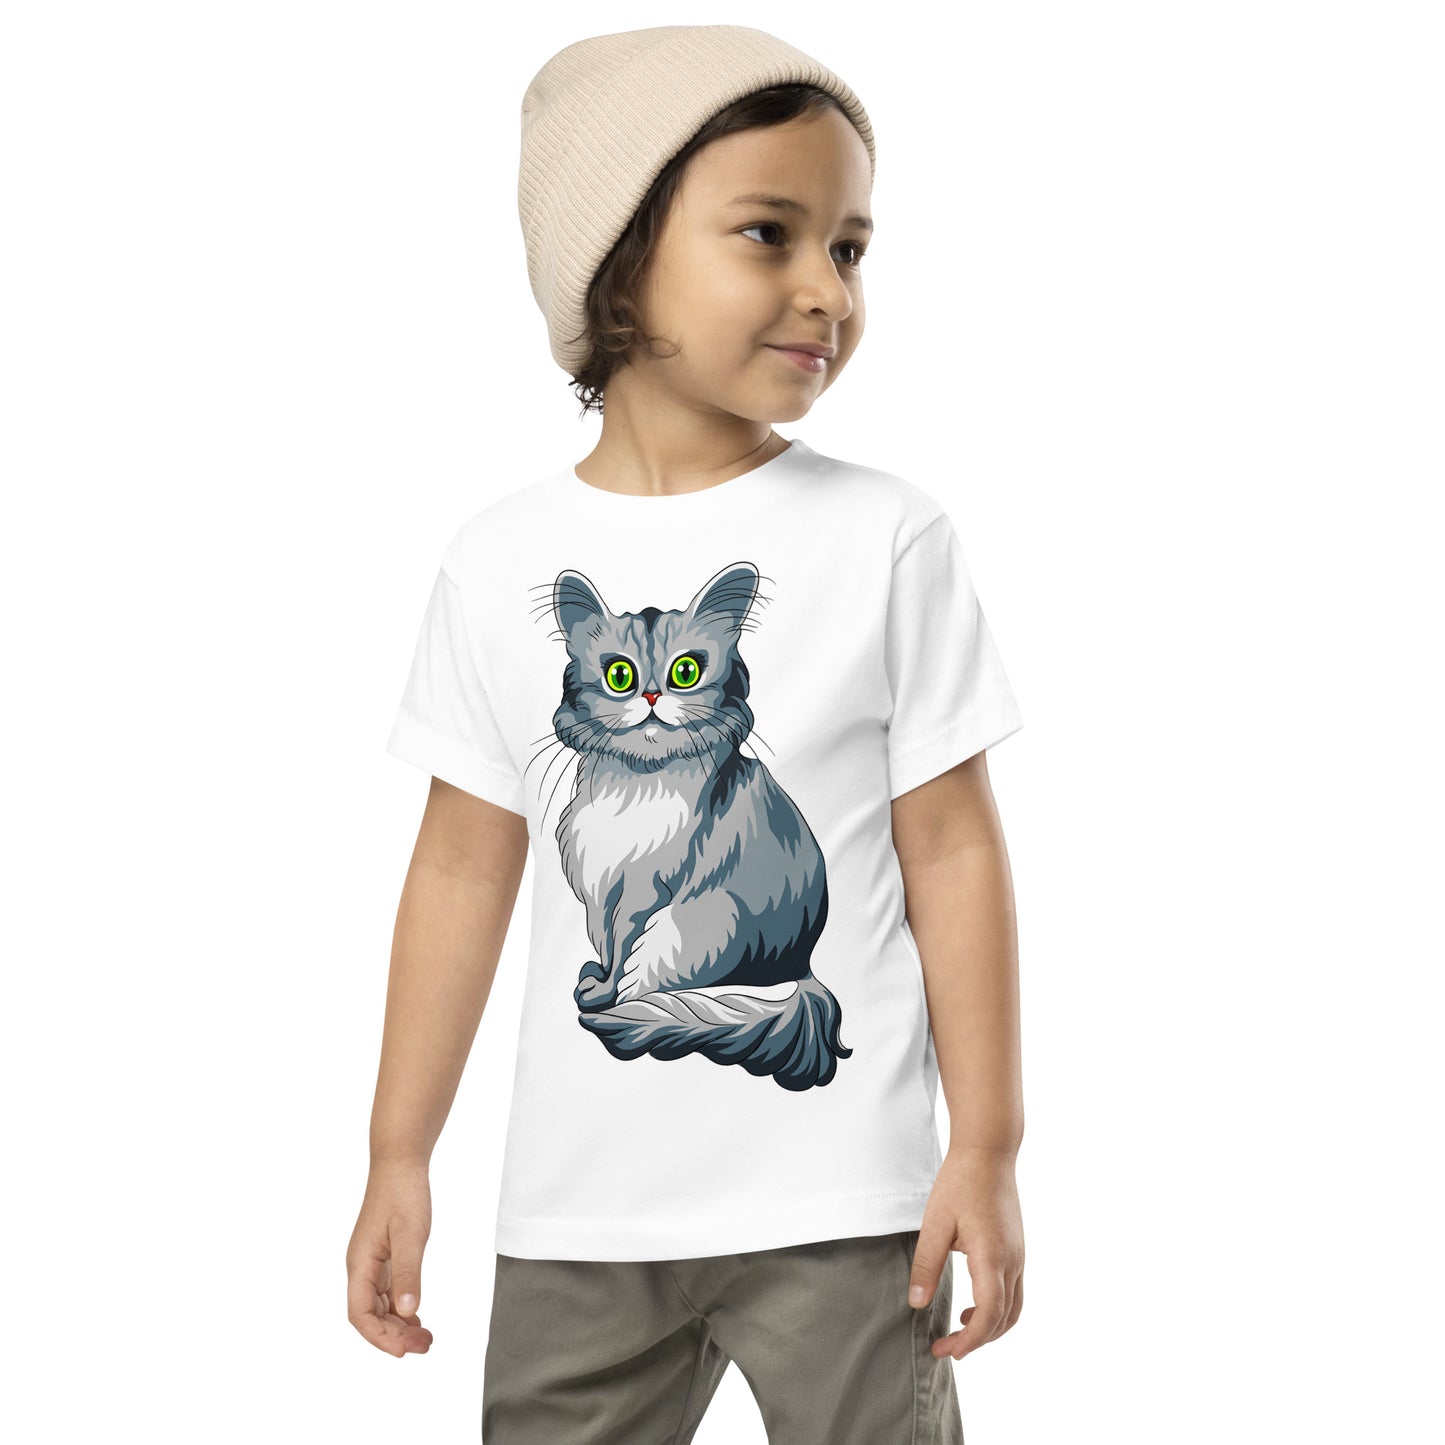 Cute Tiffany Cat T-shirt, No. 0234